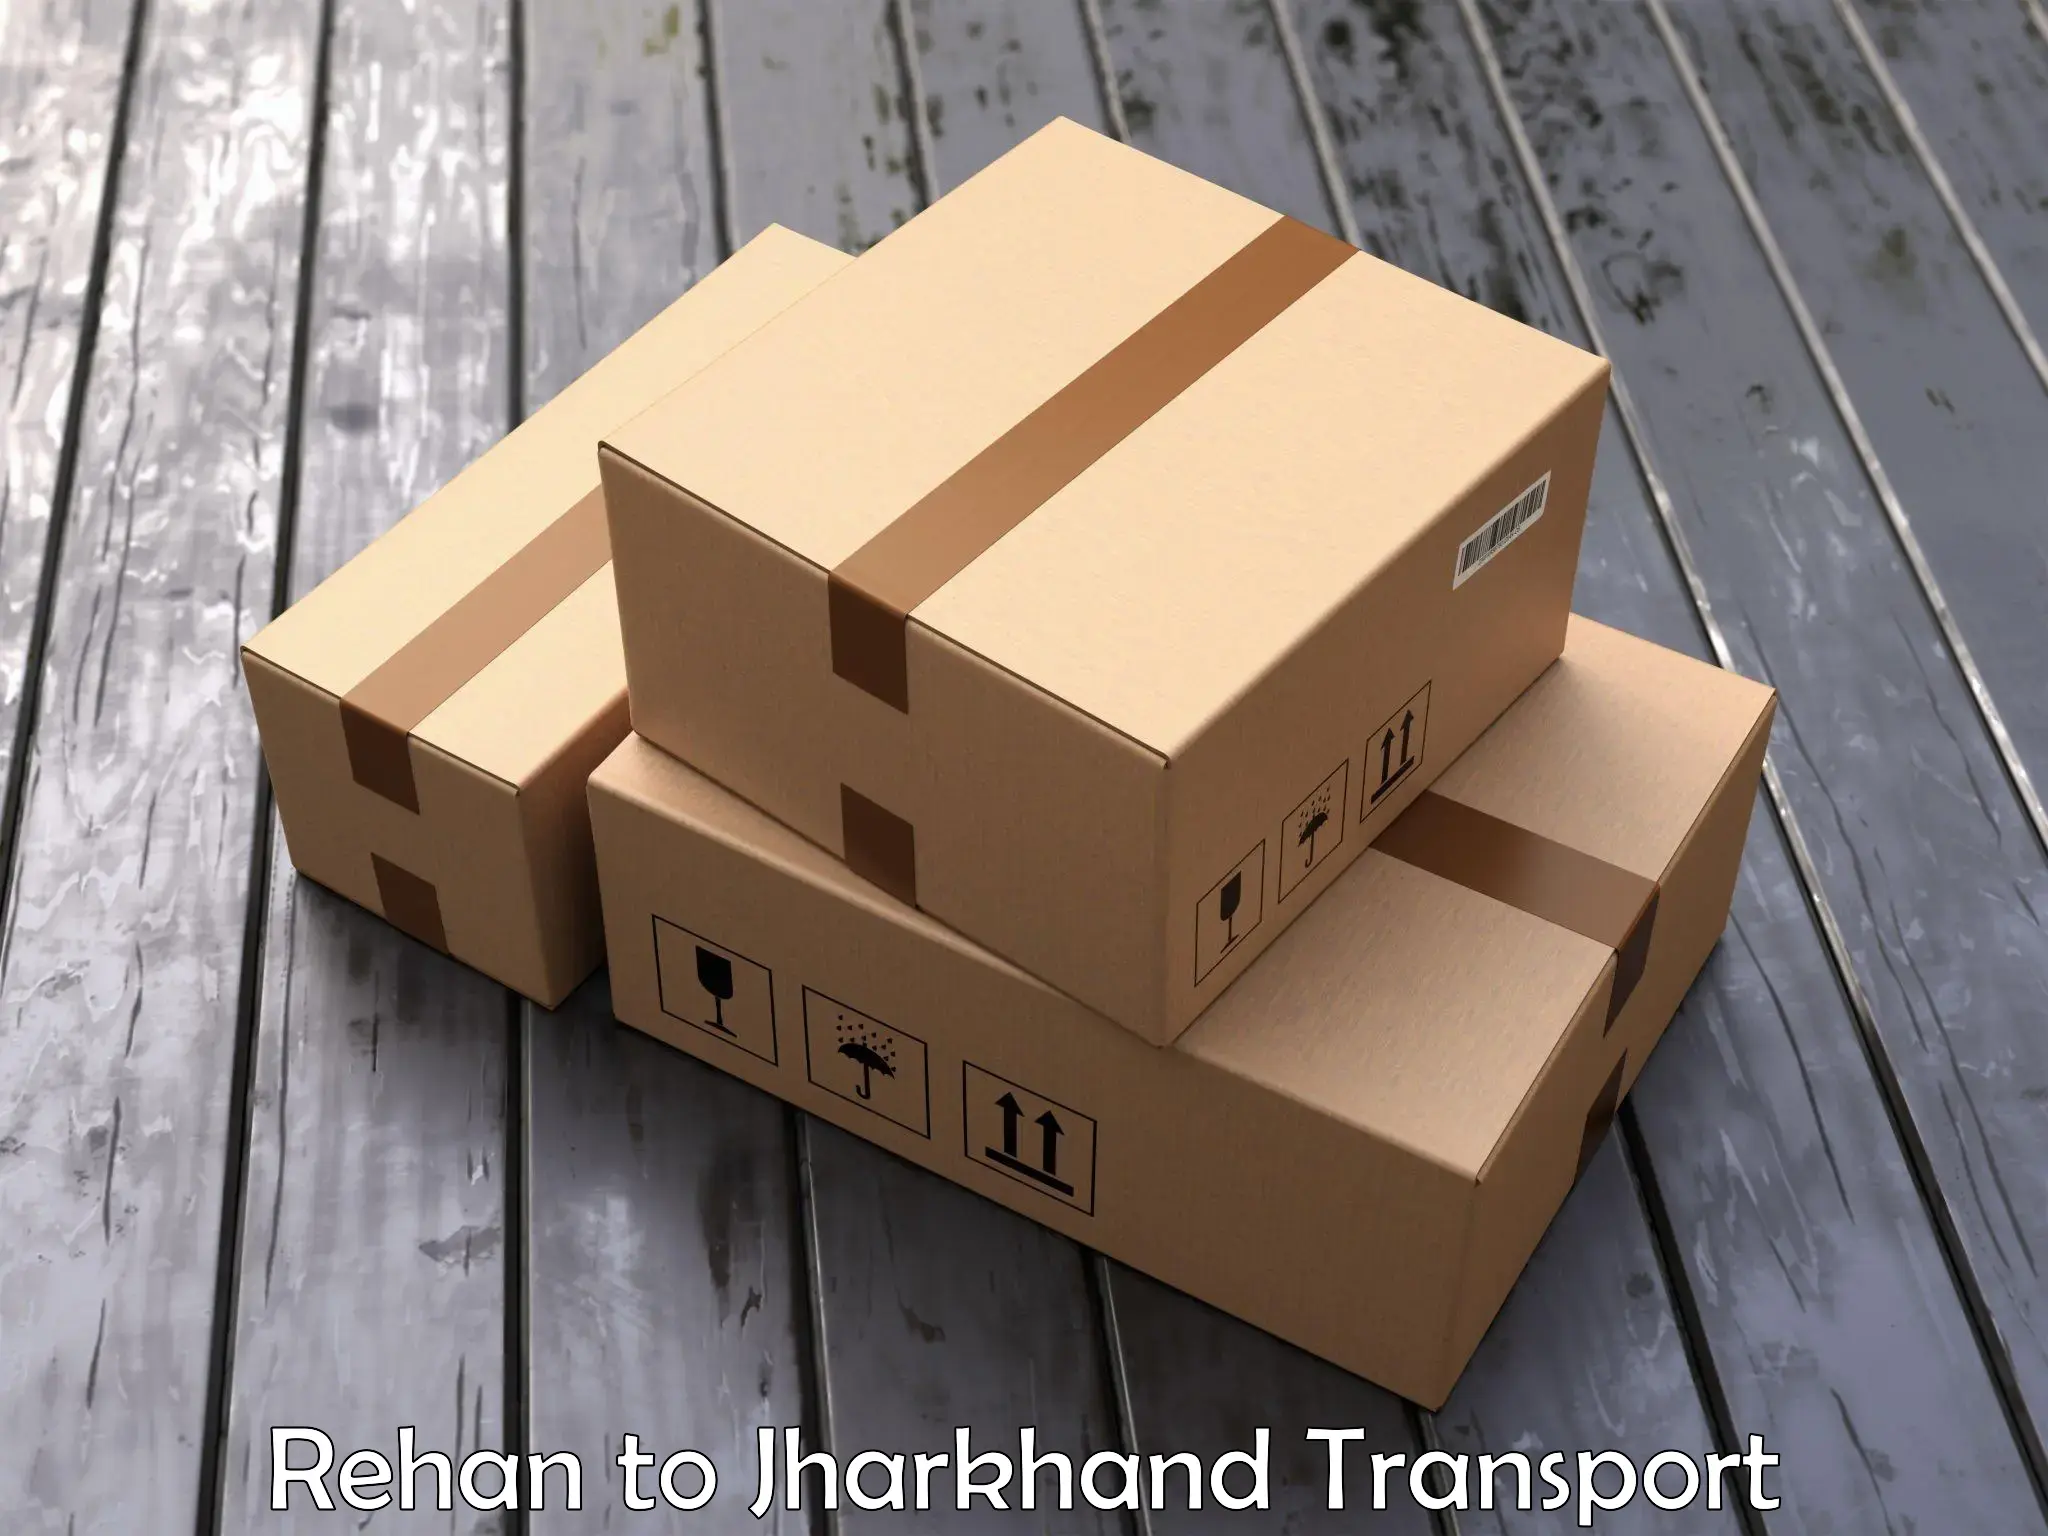 Air cargo transport services Rehan to Peterbar